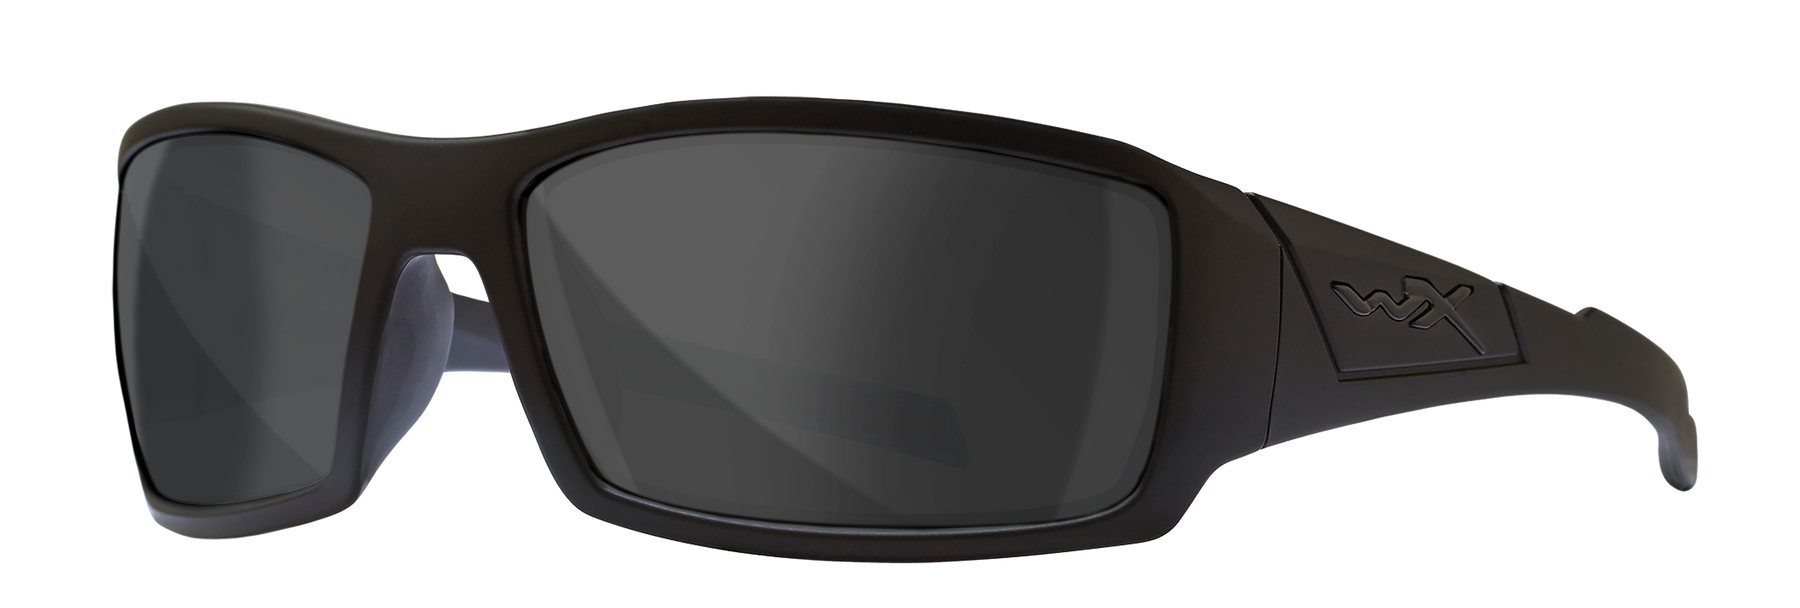 Wiley-X Twisted - Ballistic Eyewear Tactical Sunglasses